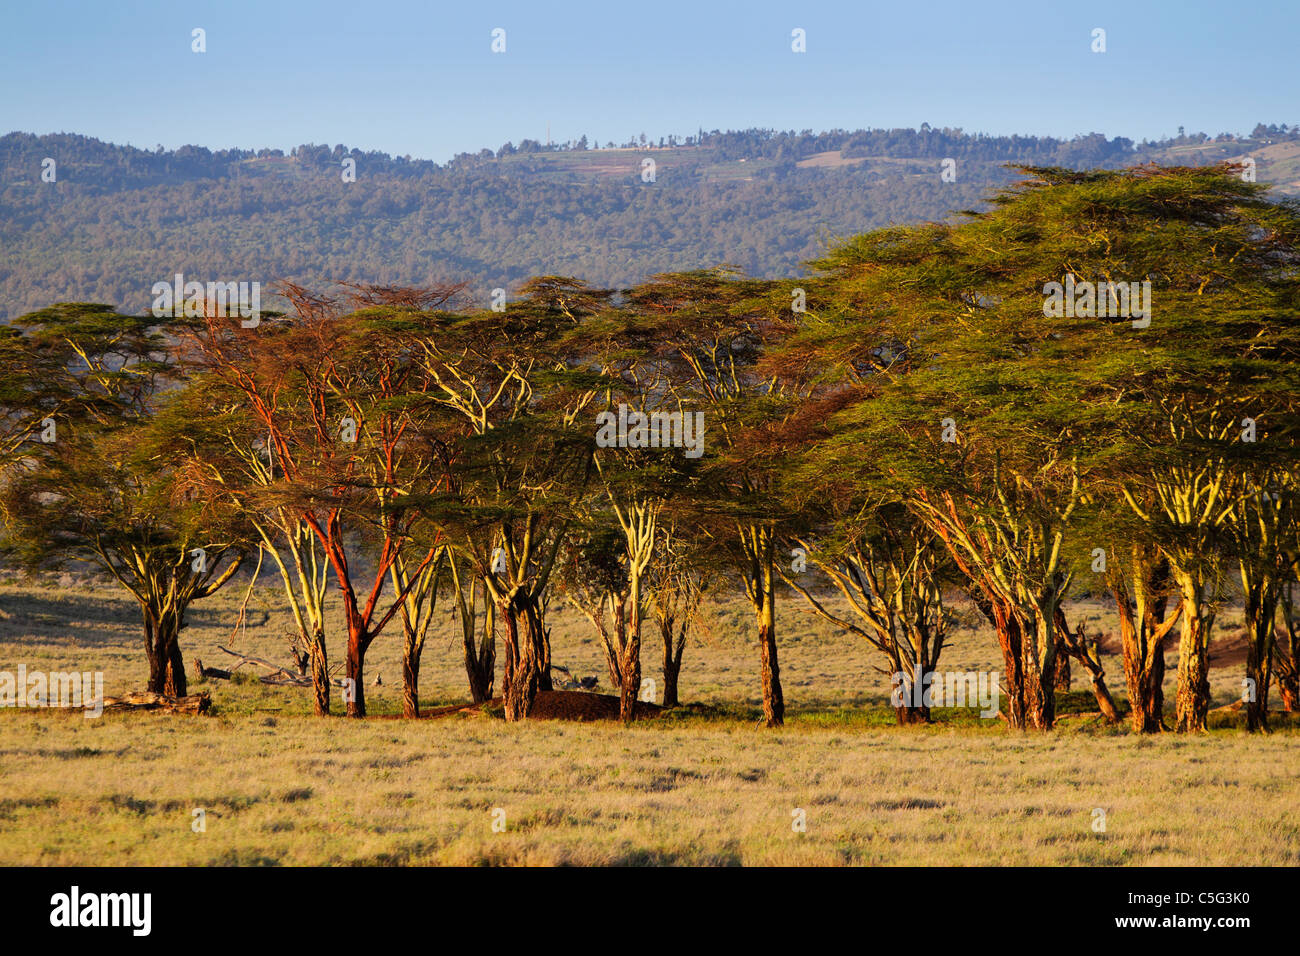 Fever tree (Acacia xanthophloea) in Kenya Stock Photo